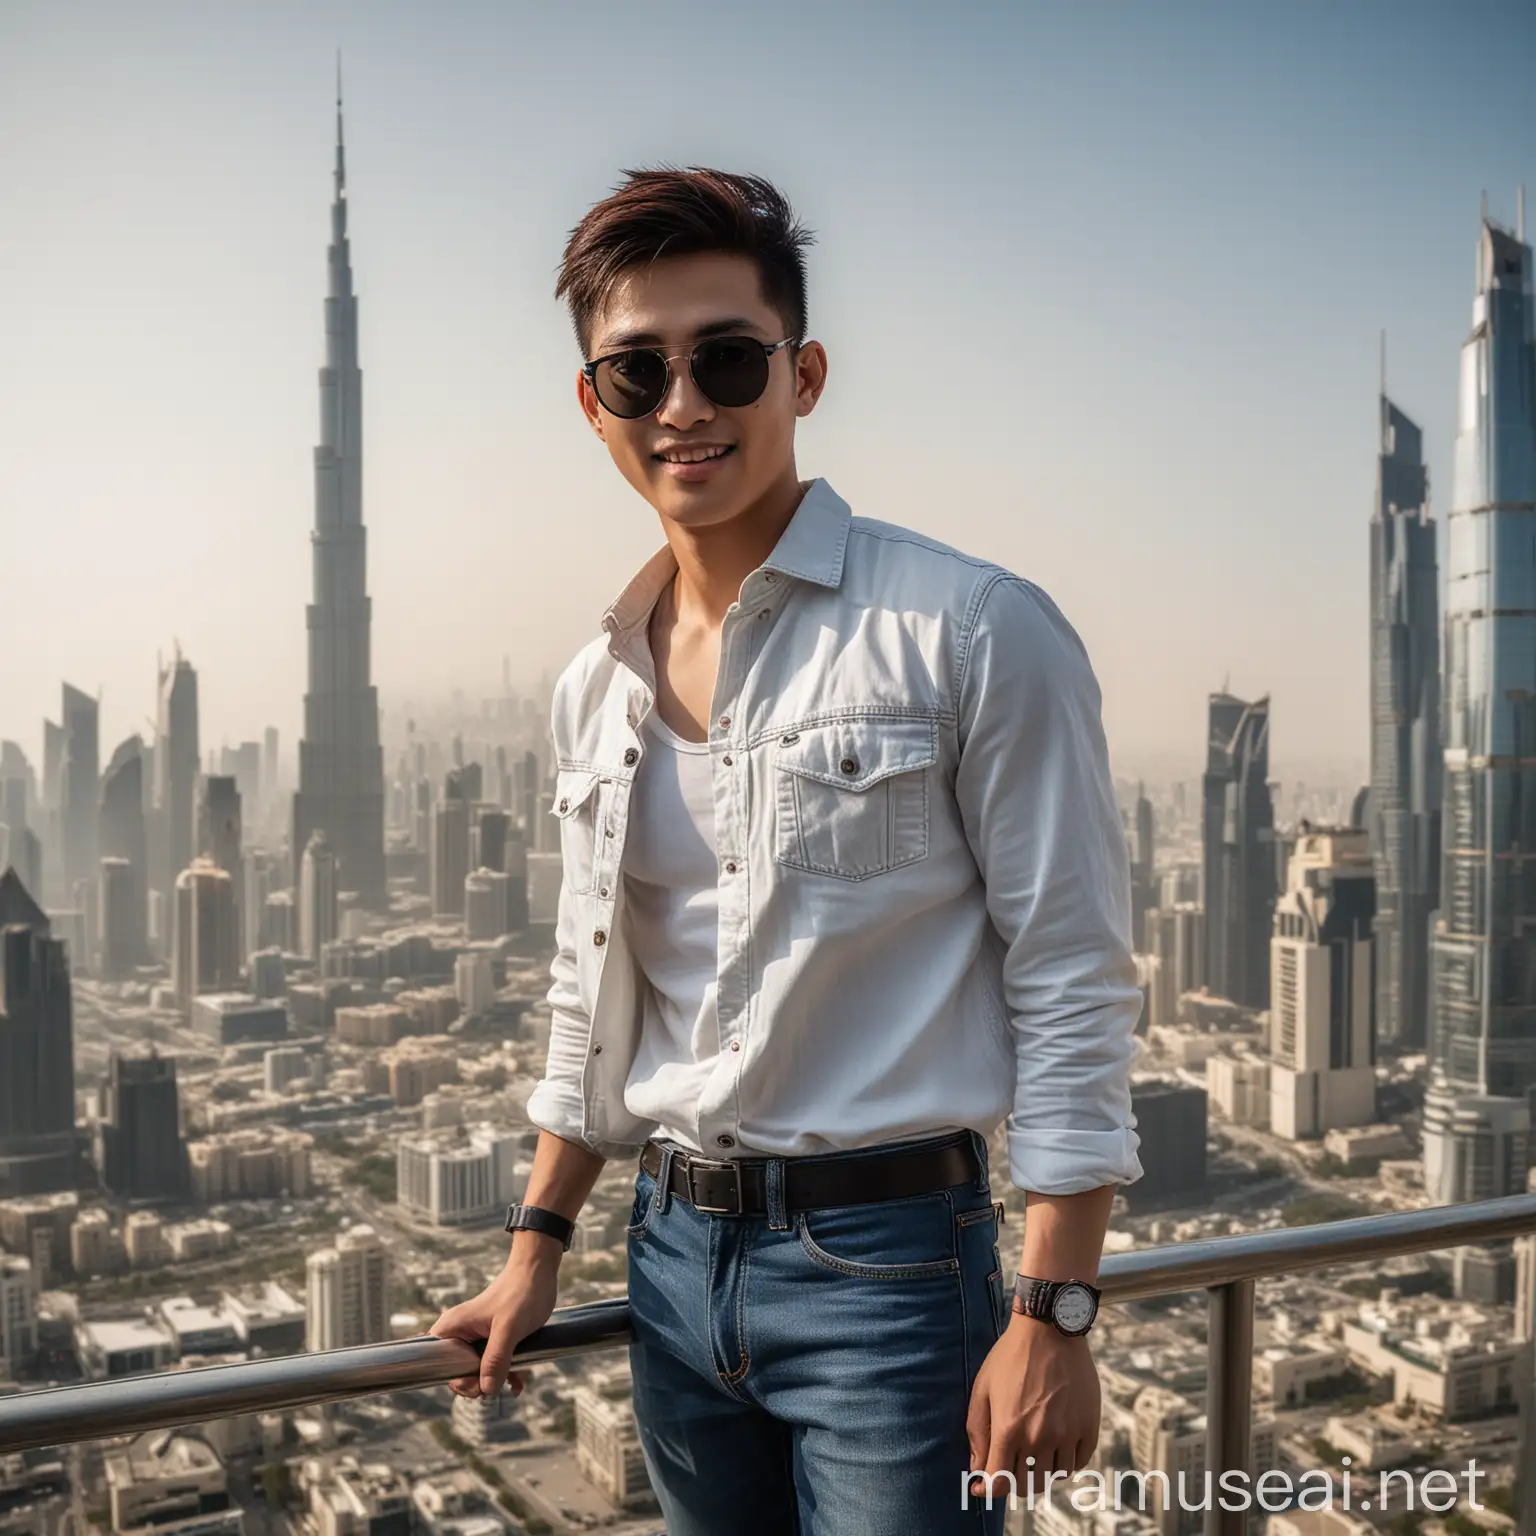 Charming Korean Man in Modern Outfit at Burj Khalifah City View